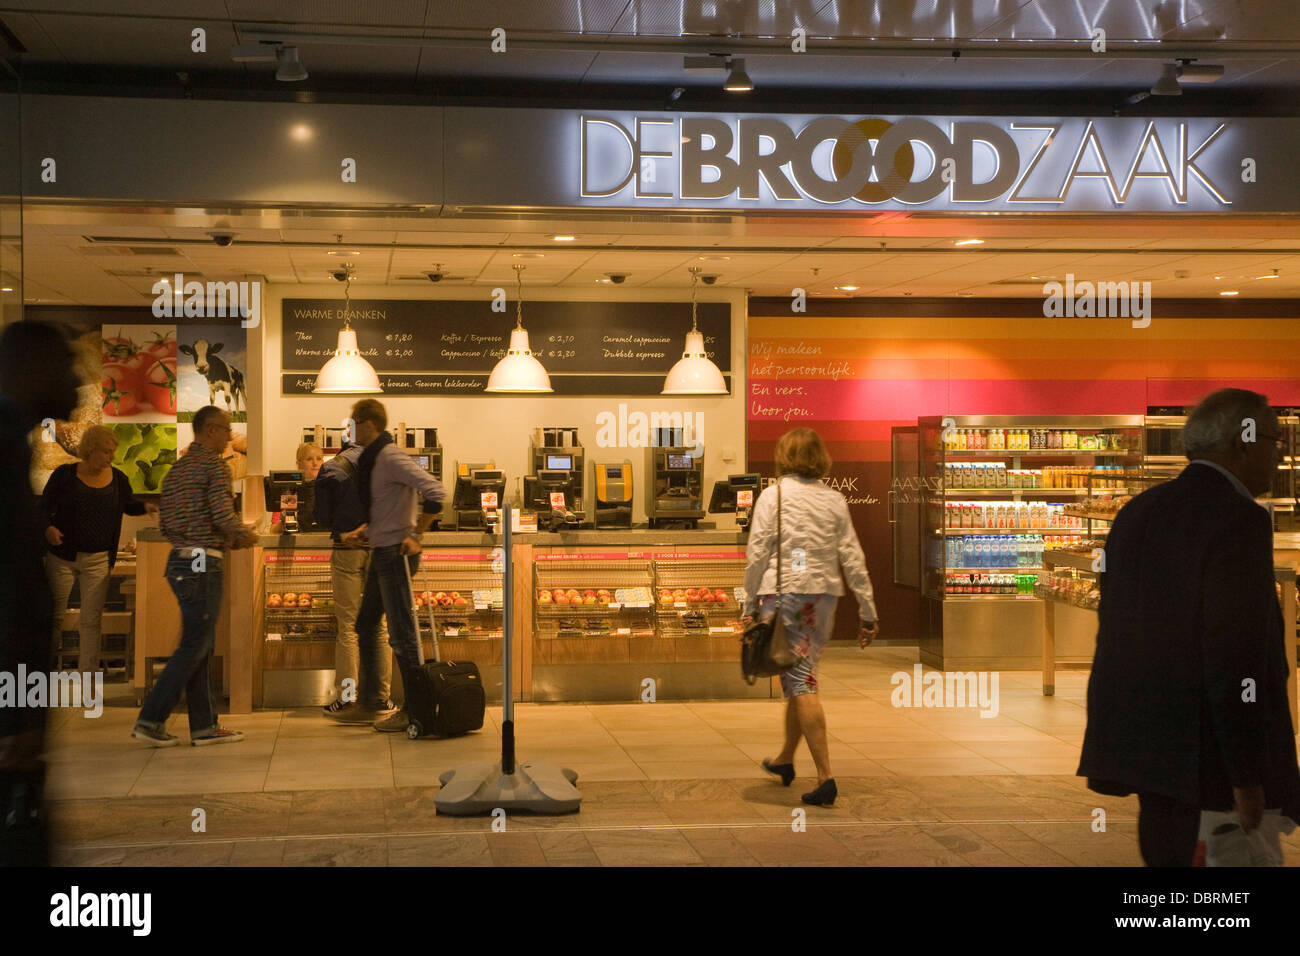 De Brood Zaak bakery shop Rotterdam Central railway station Netherlands  Stock Photo - Alamy